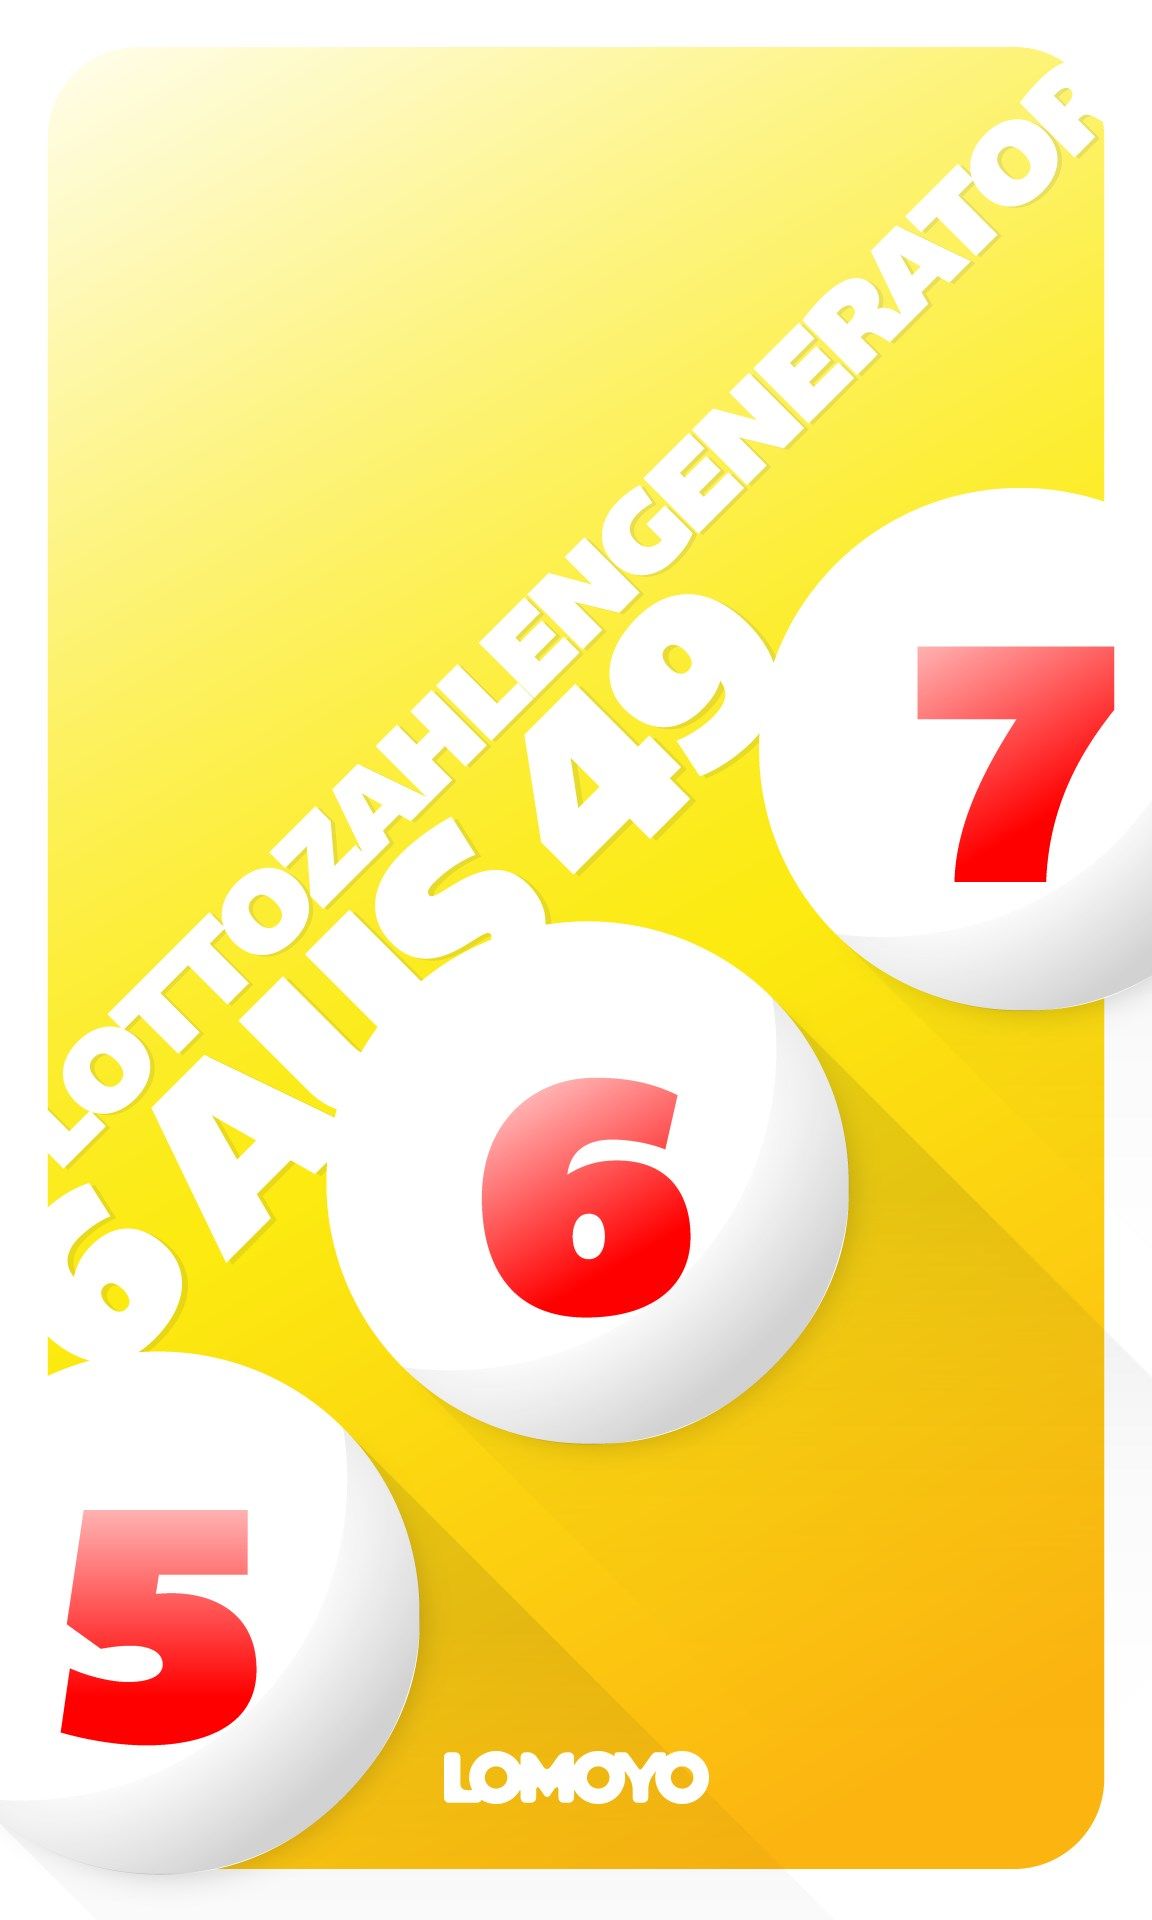 Lottozahlengenerator 6 aus 49